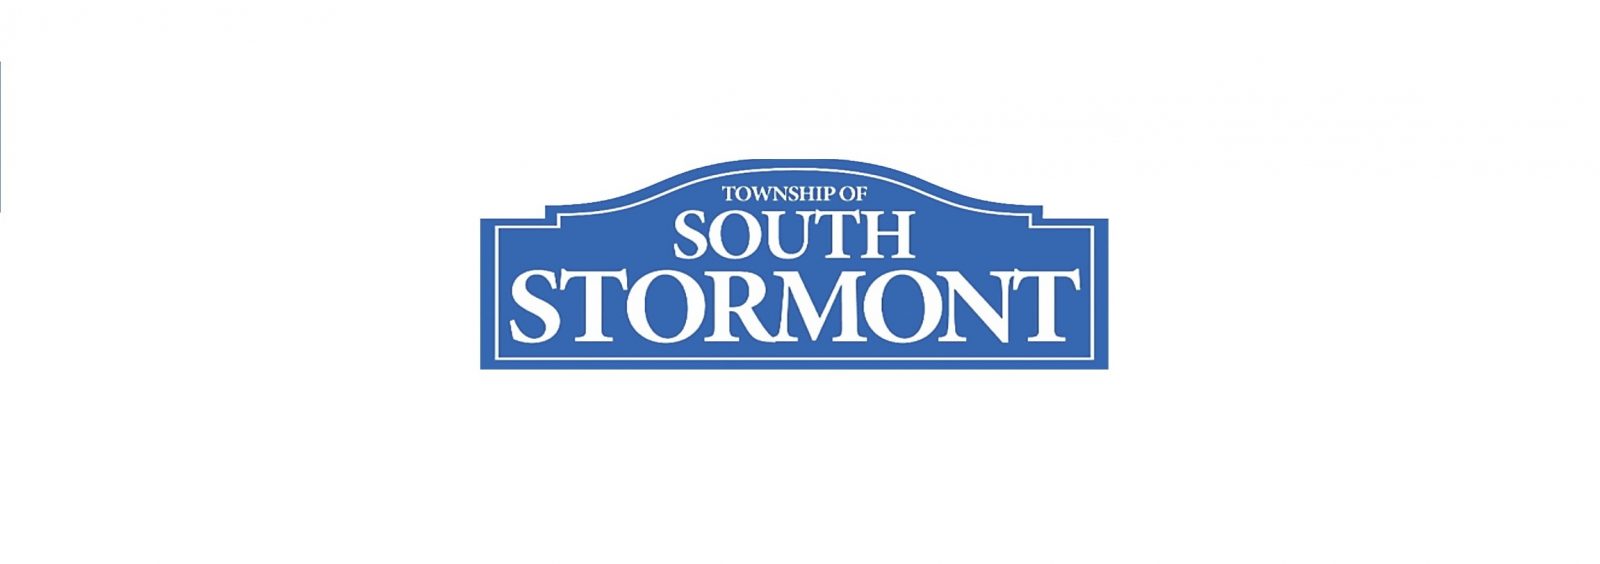 South Stormont adopts new strategic plan